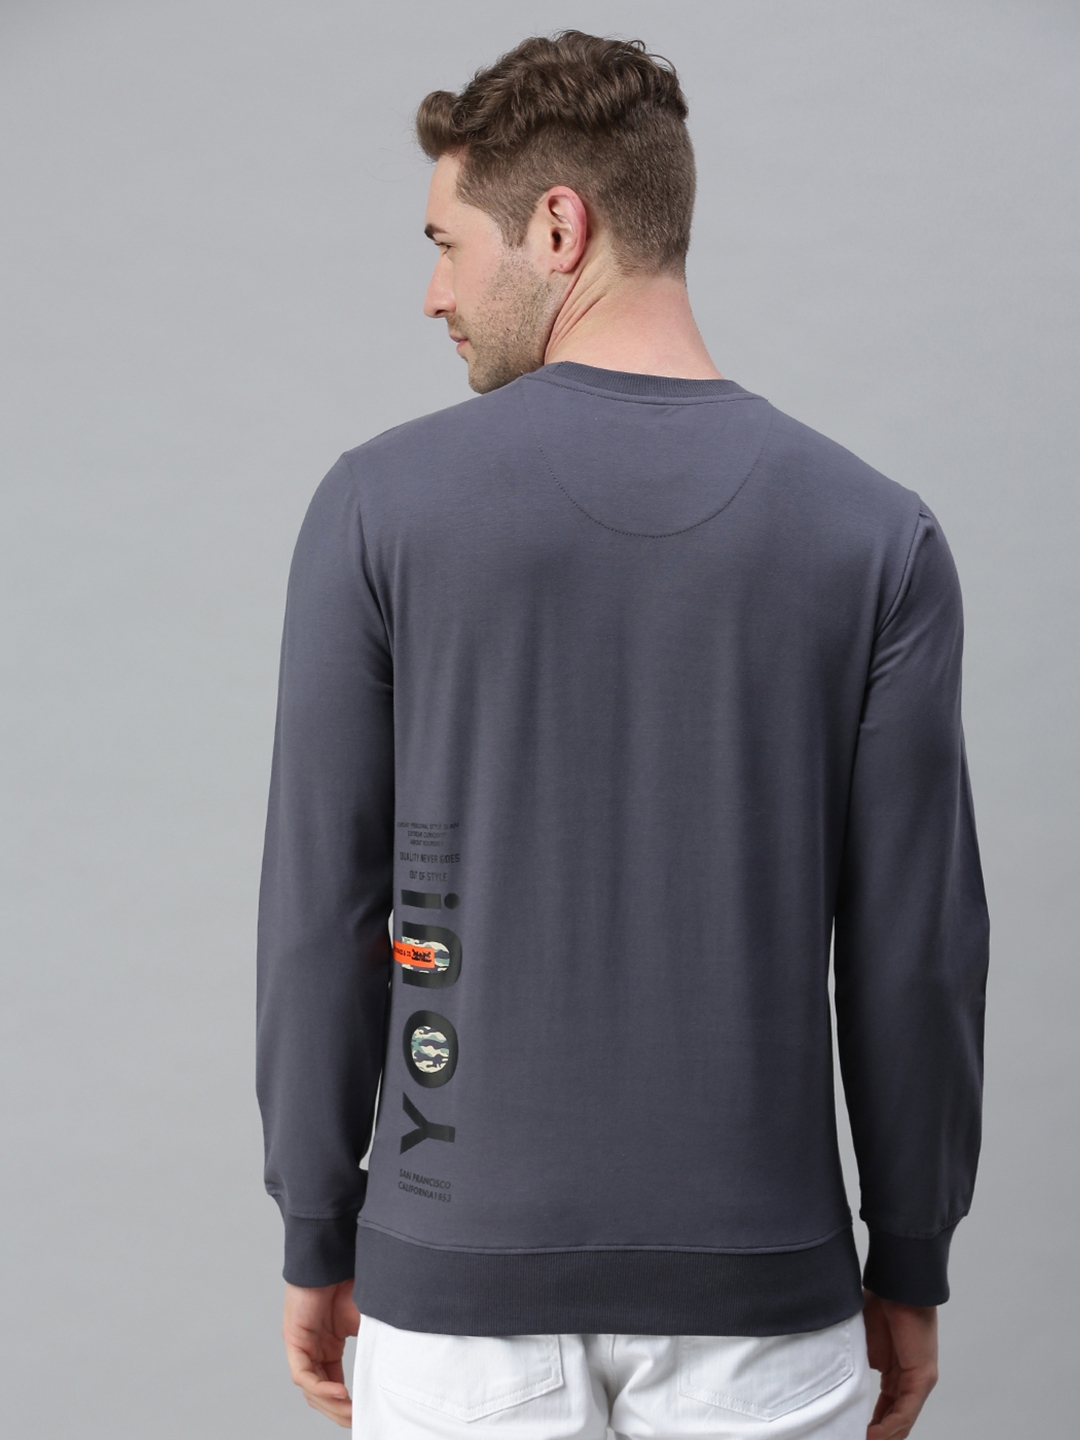 Men's Grey Cotton Blend Printed Sweatshirts